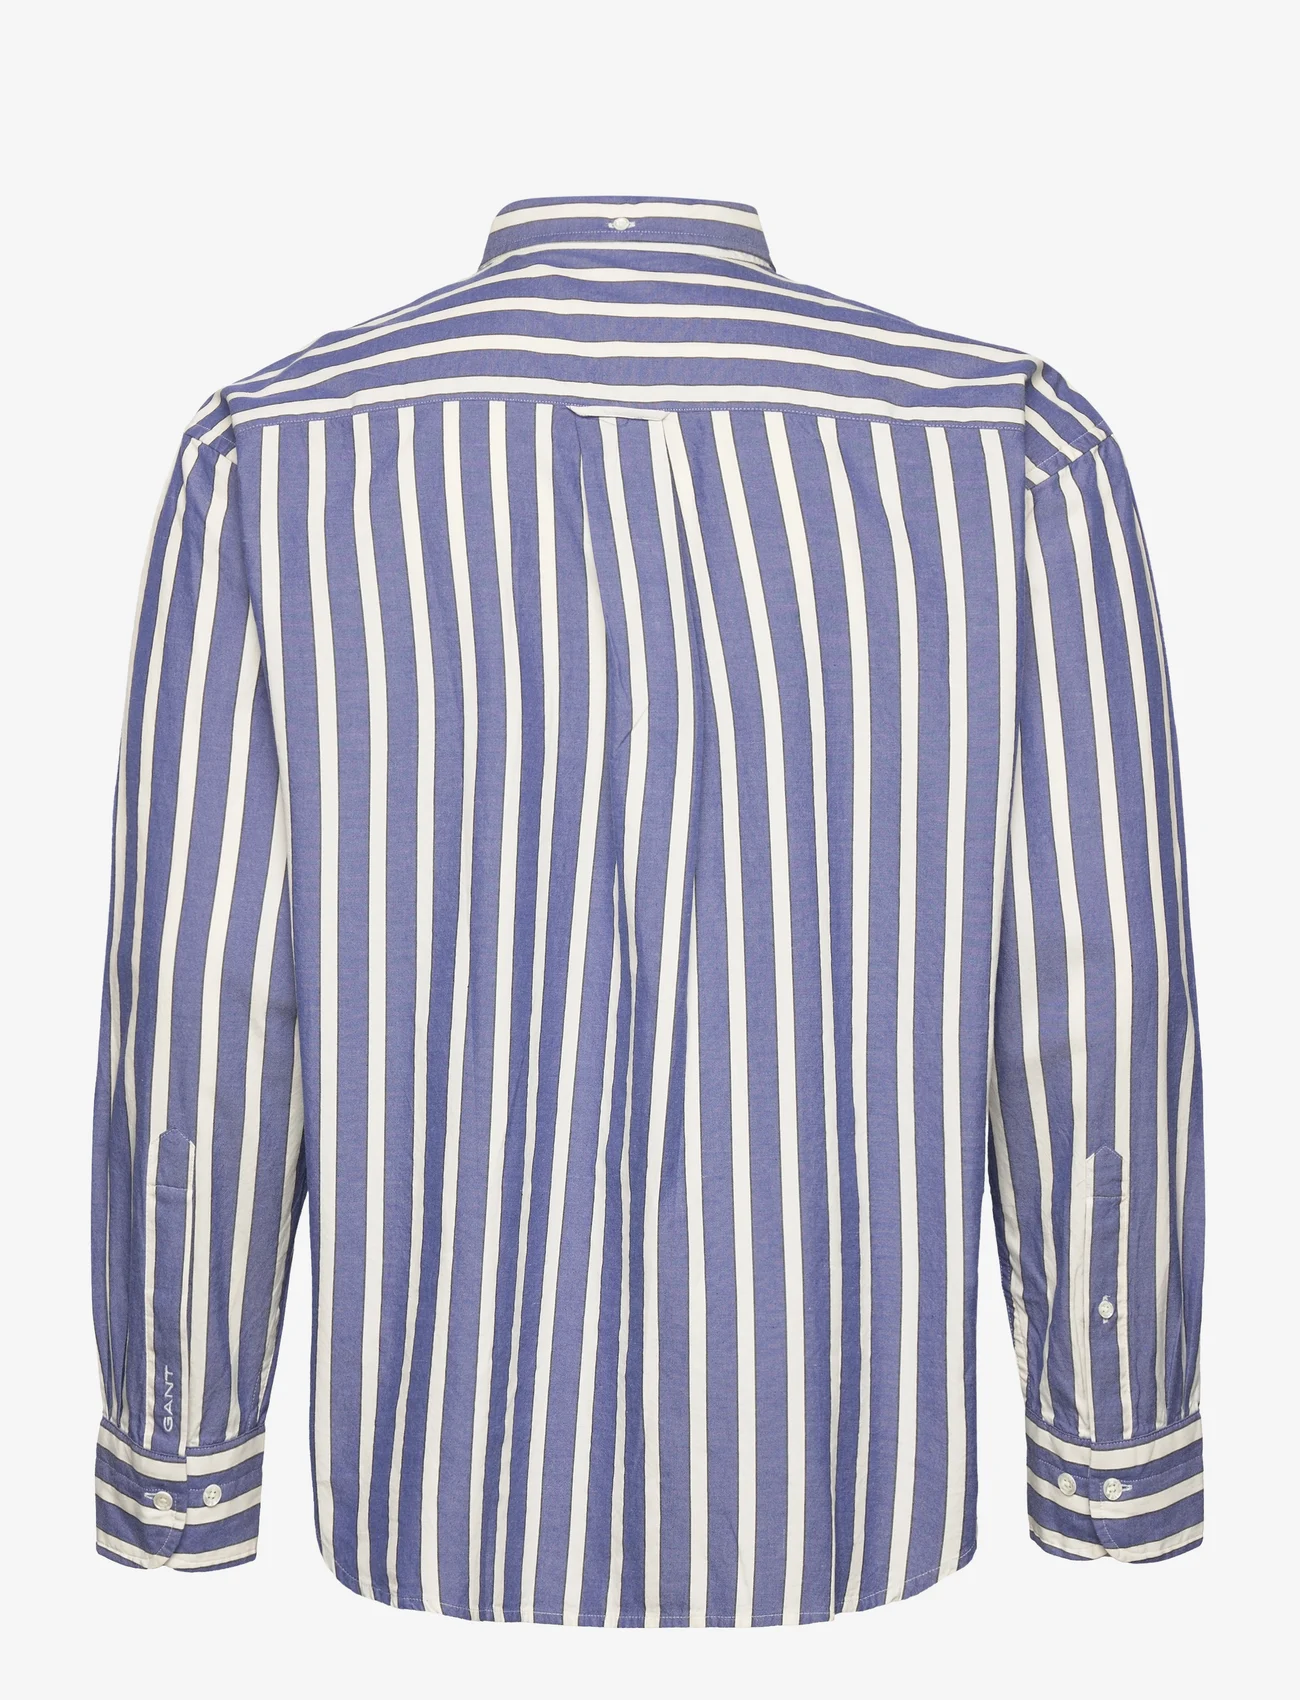 GANT - REL DREAMY OXFORD STRIPE SHIRT - oxford skjorter - college blue - 1